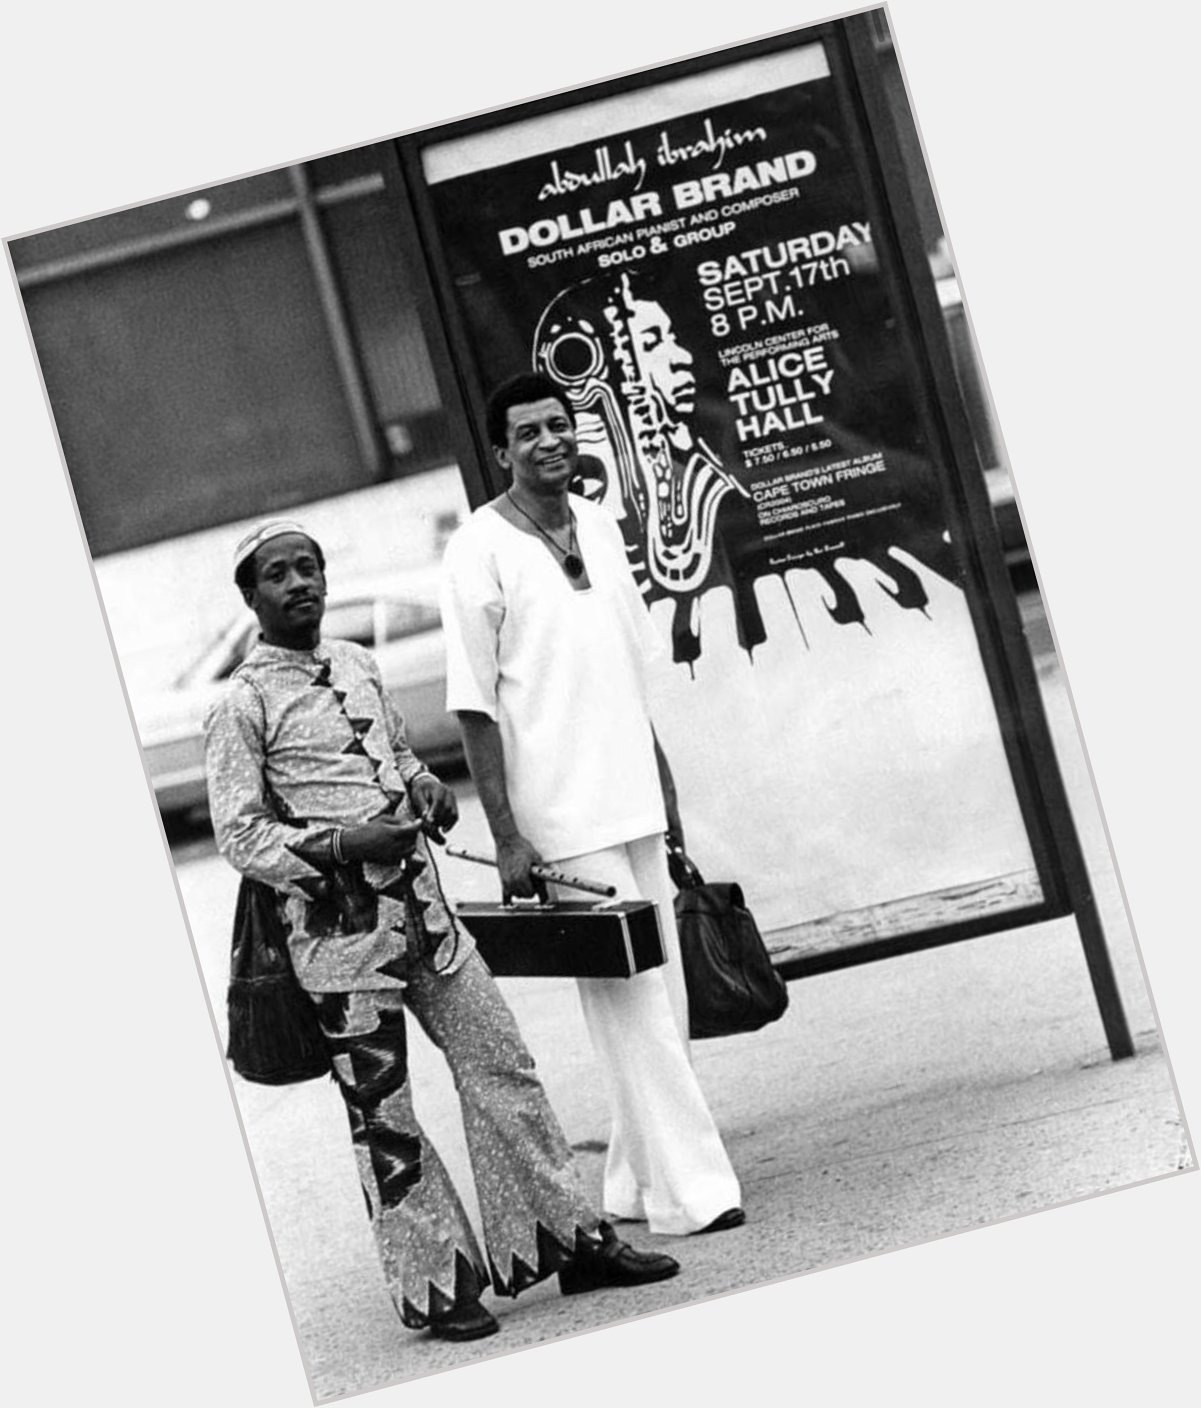 Happy Bday to Abdullah Ibrahim - here w/ Johnny Dyani  (Alice Tully Hall, New York City, 1977)  